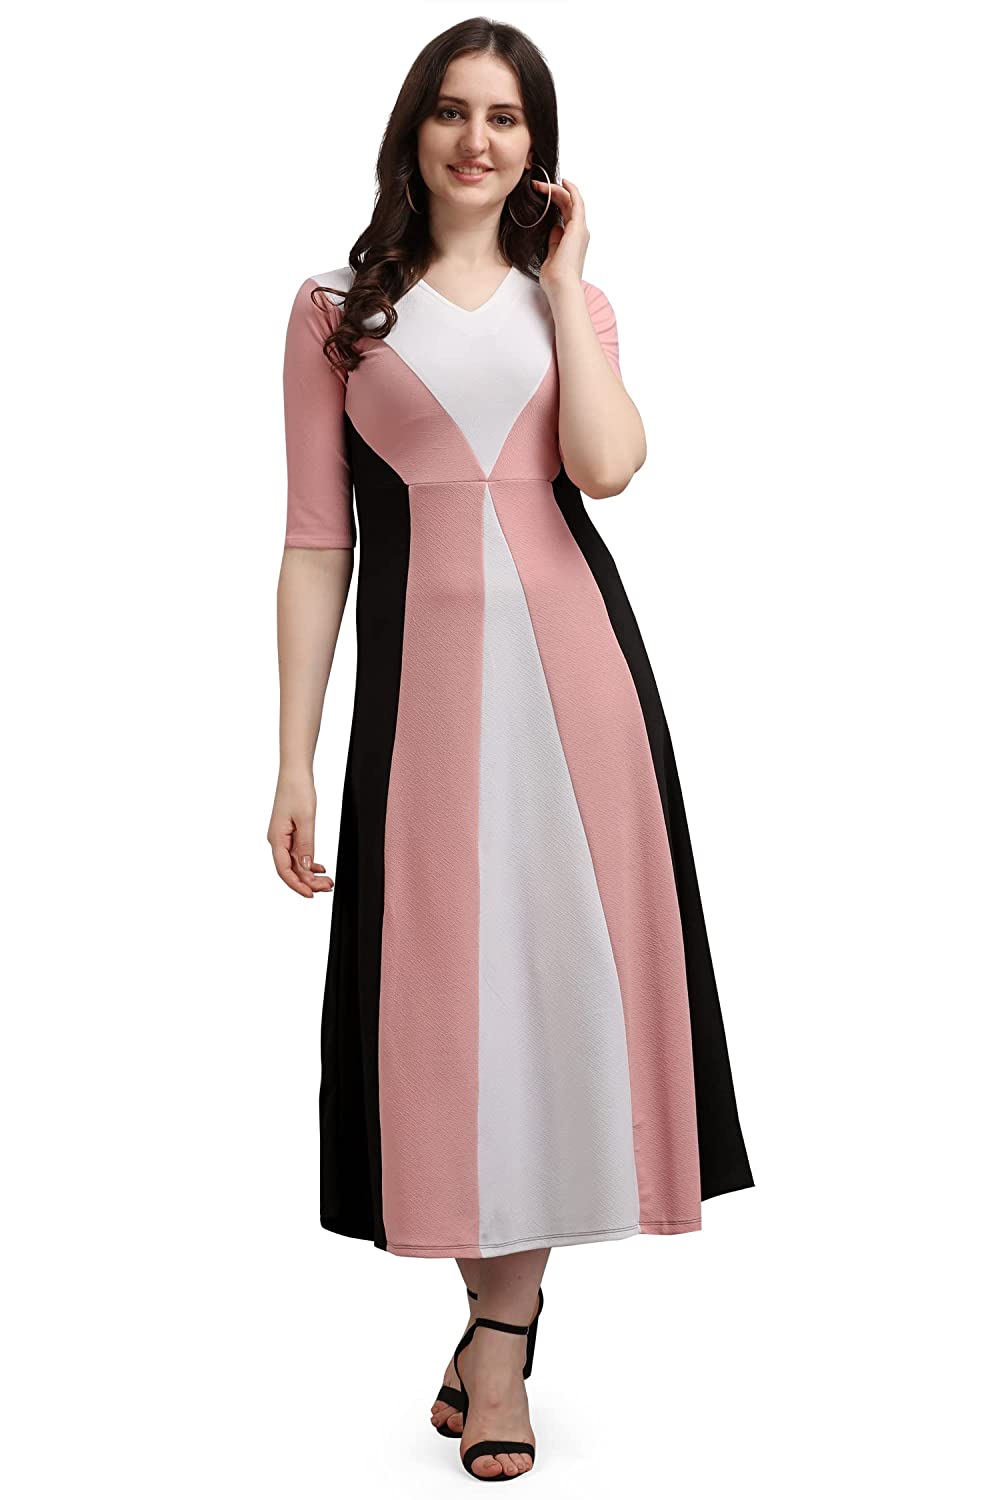 PURVAJA Women's Maxi Dress -  DRESSES in Sri Lanka from Arcade Online Shopping - Just Rs. 4699!